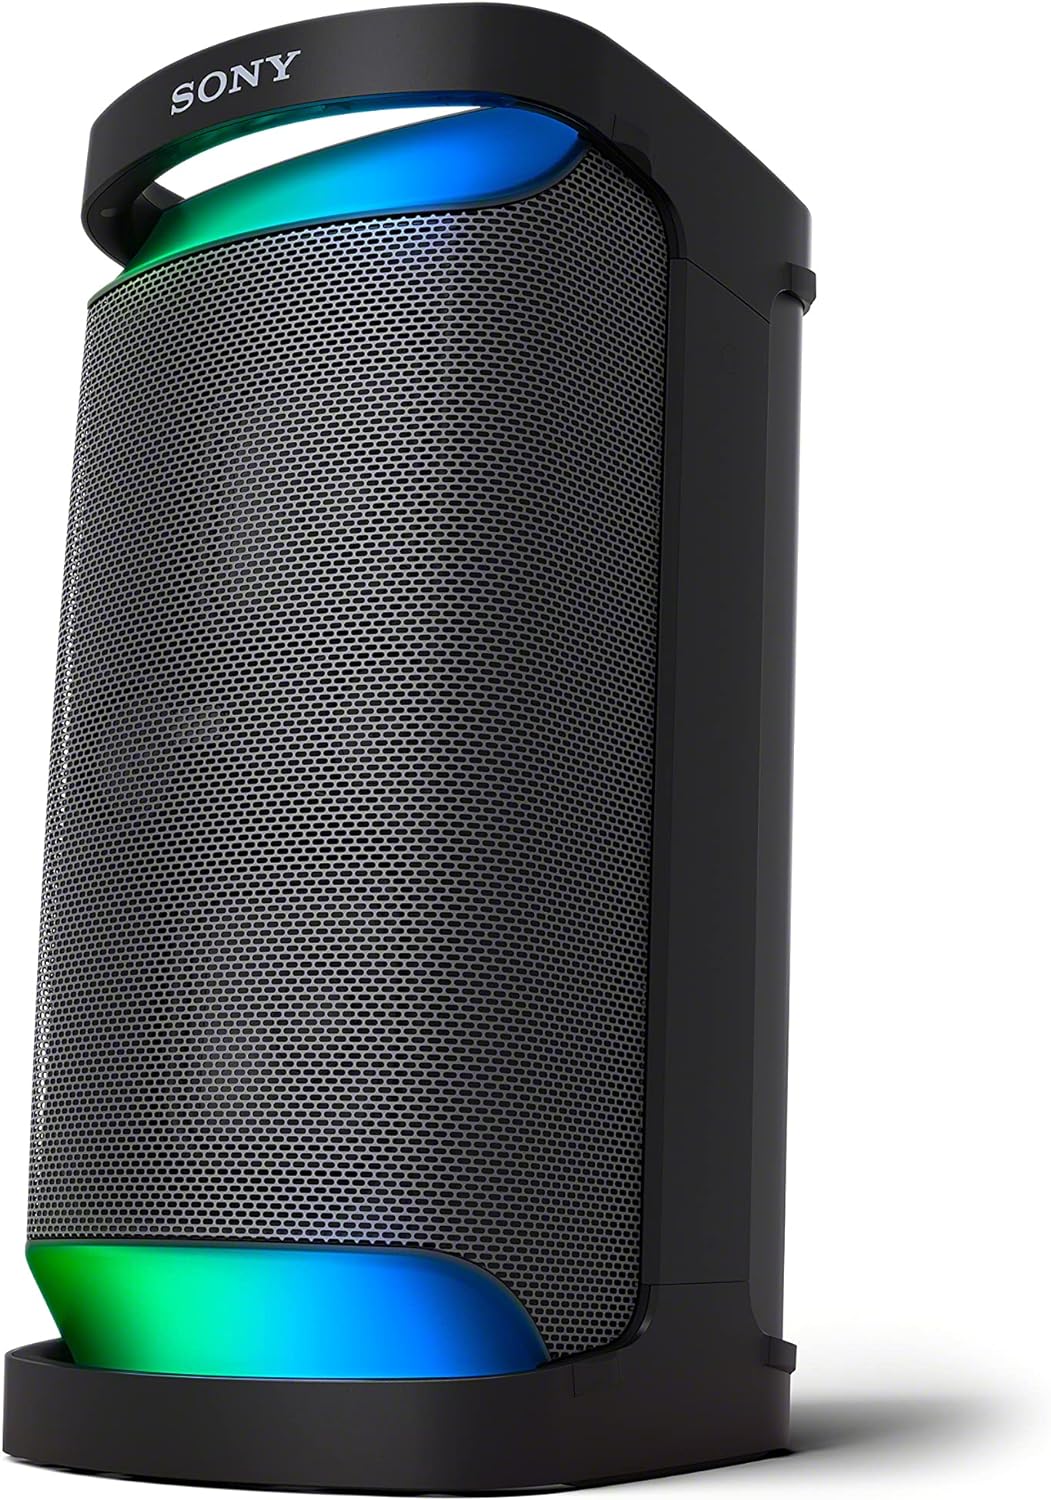 Sony XP500 Splashproof Bluetooth Portable Party Speaker - Black (Refurbished - 90 Days Warranty)